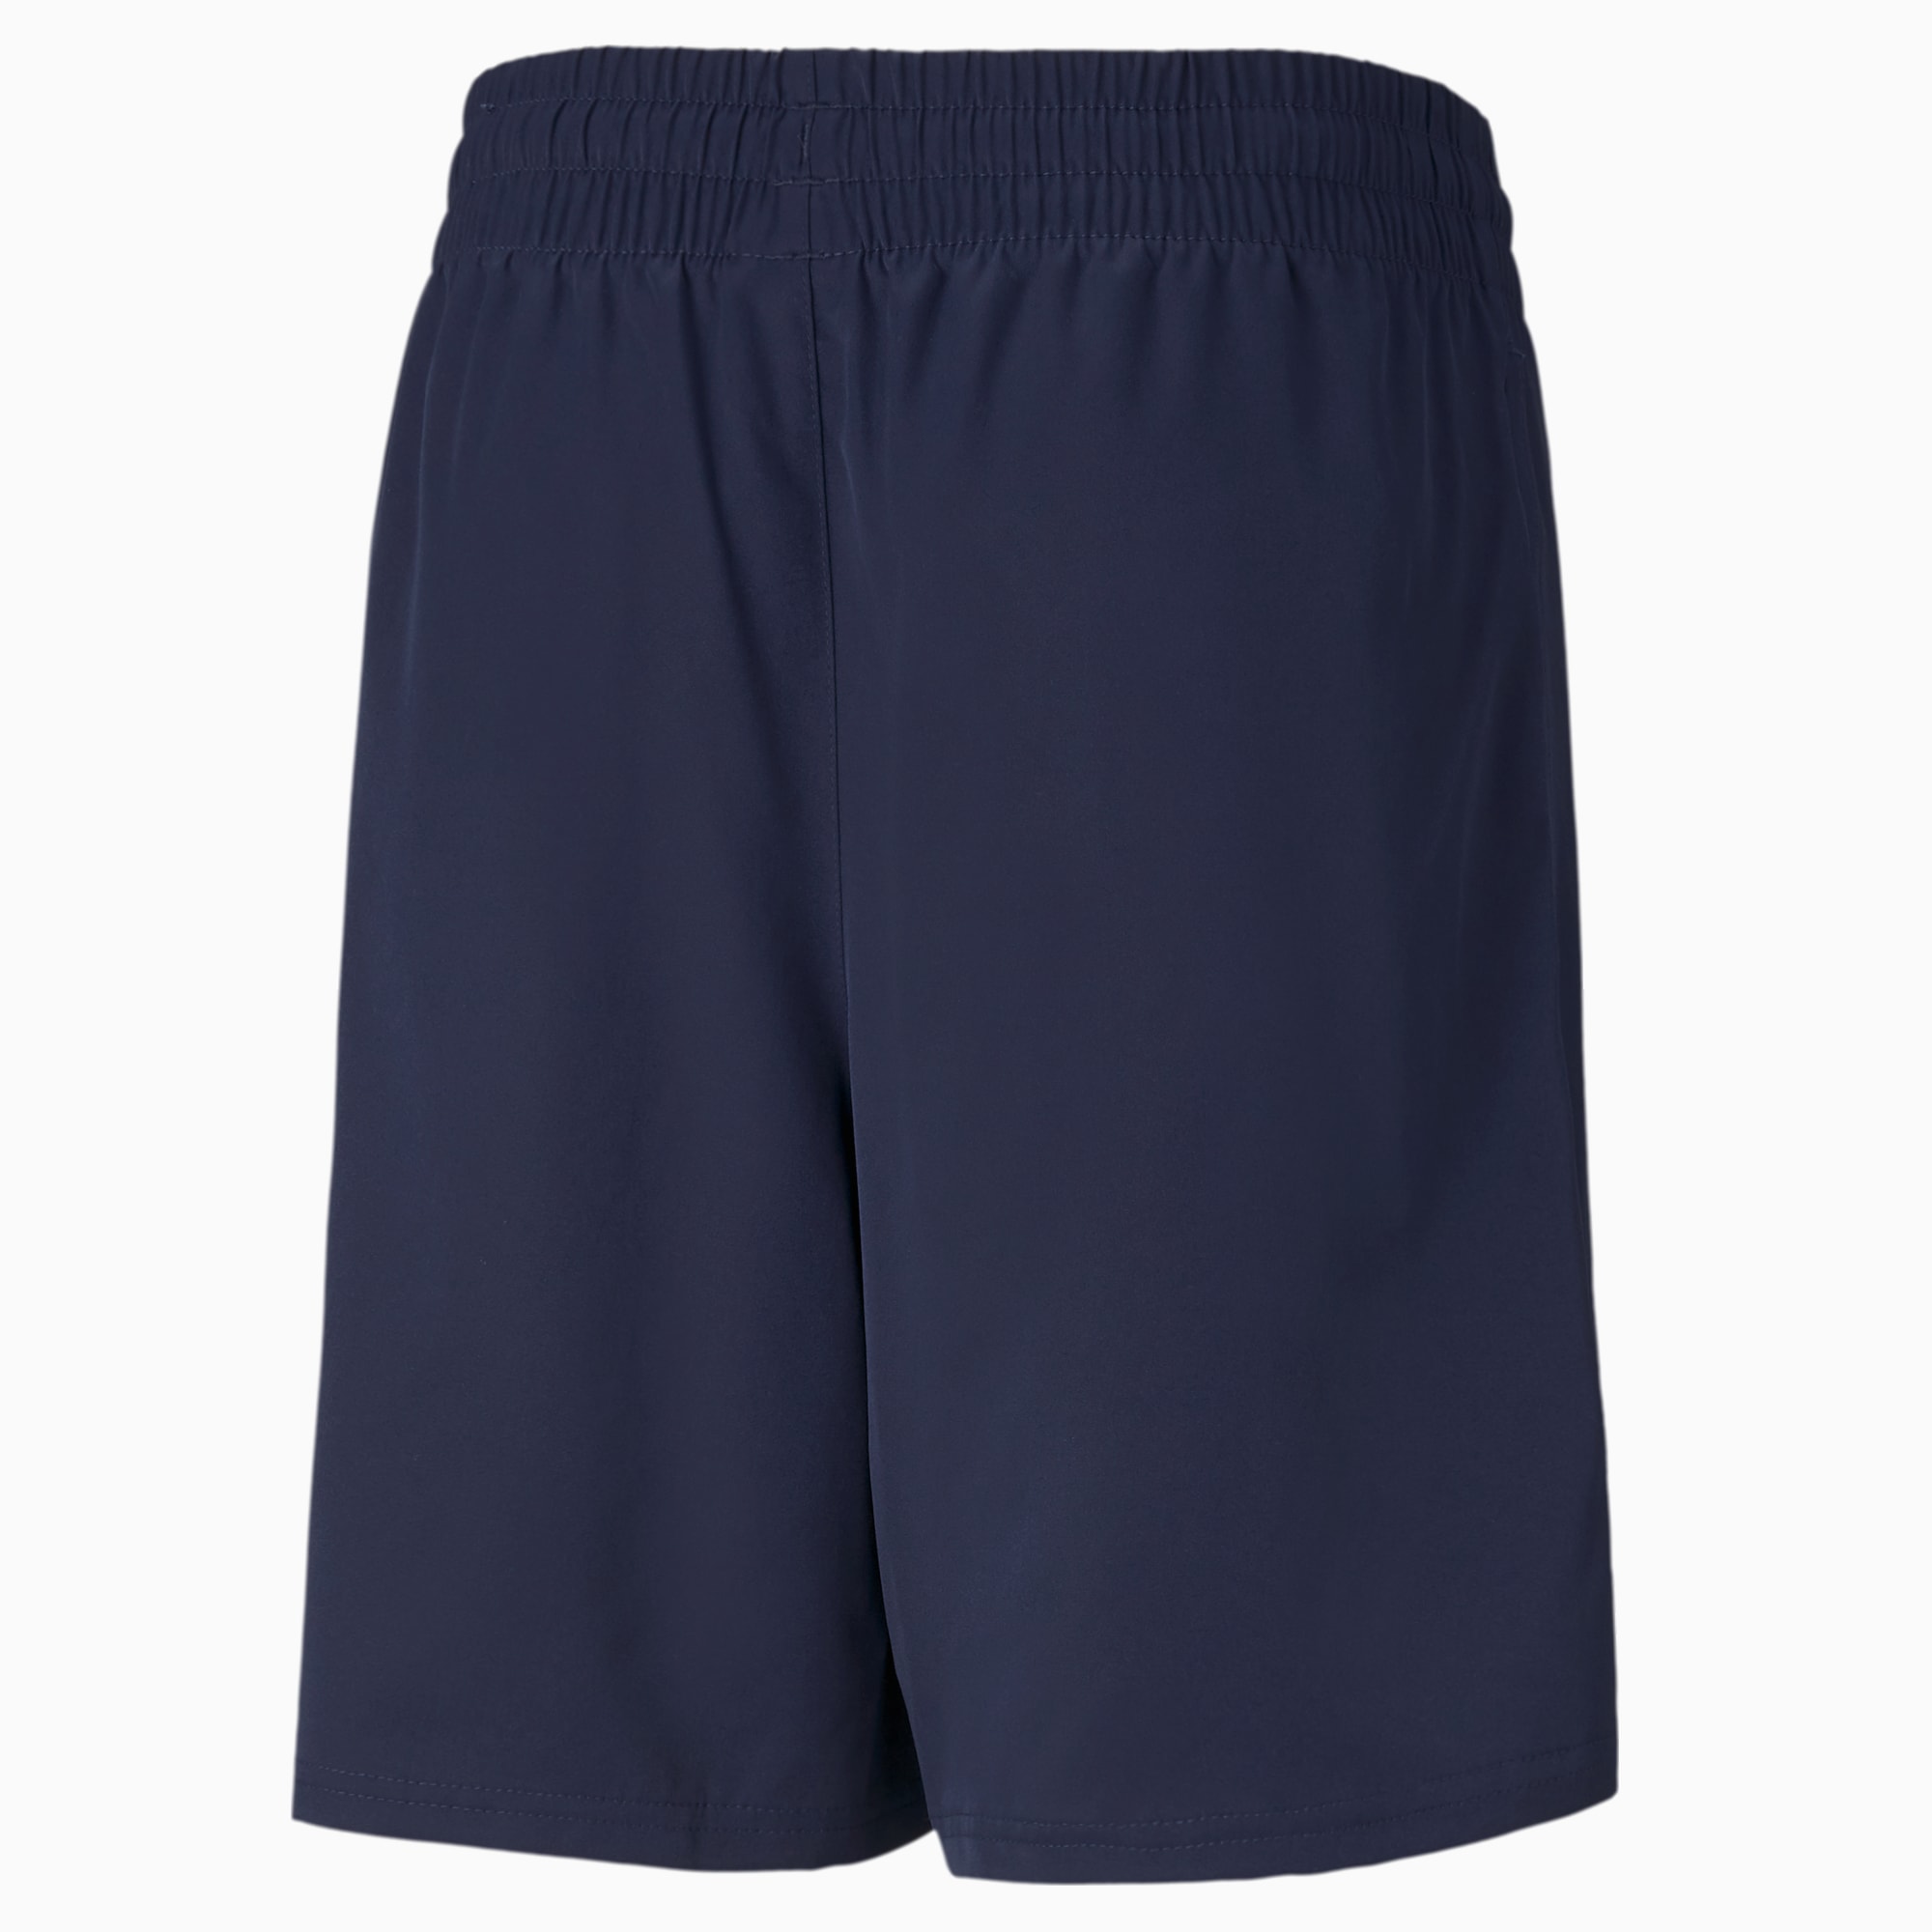 PUMA Performance Woven 7” Men's Training Shorts, Peacoat, Size S, Clothing